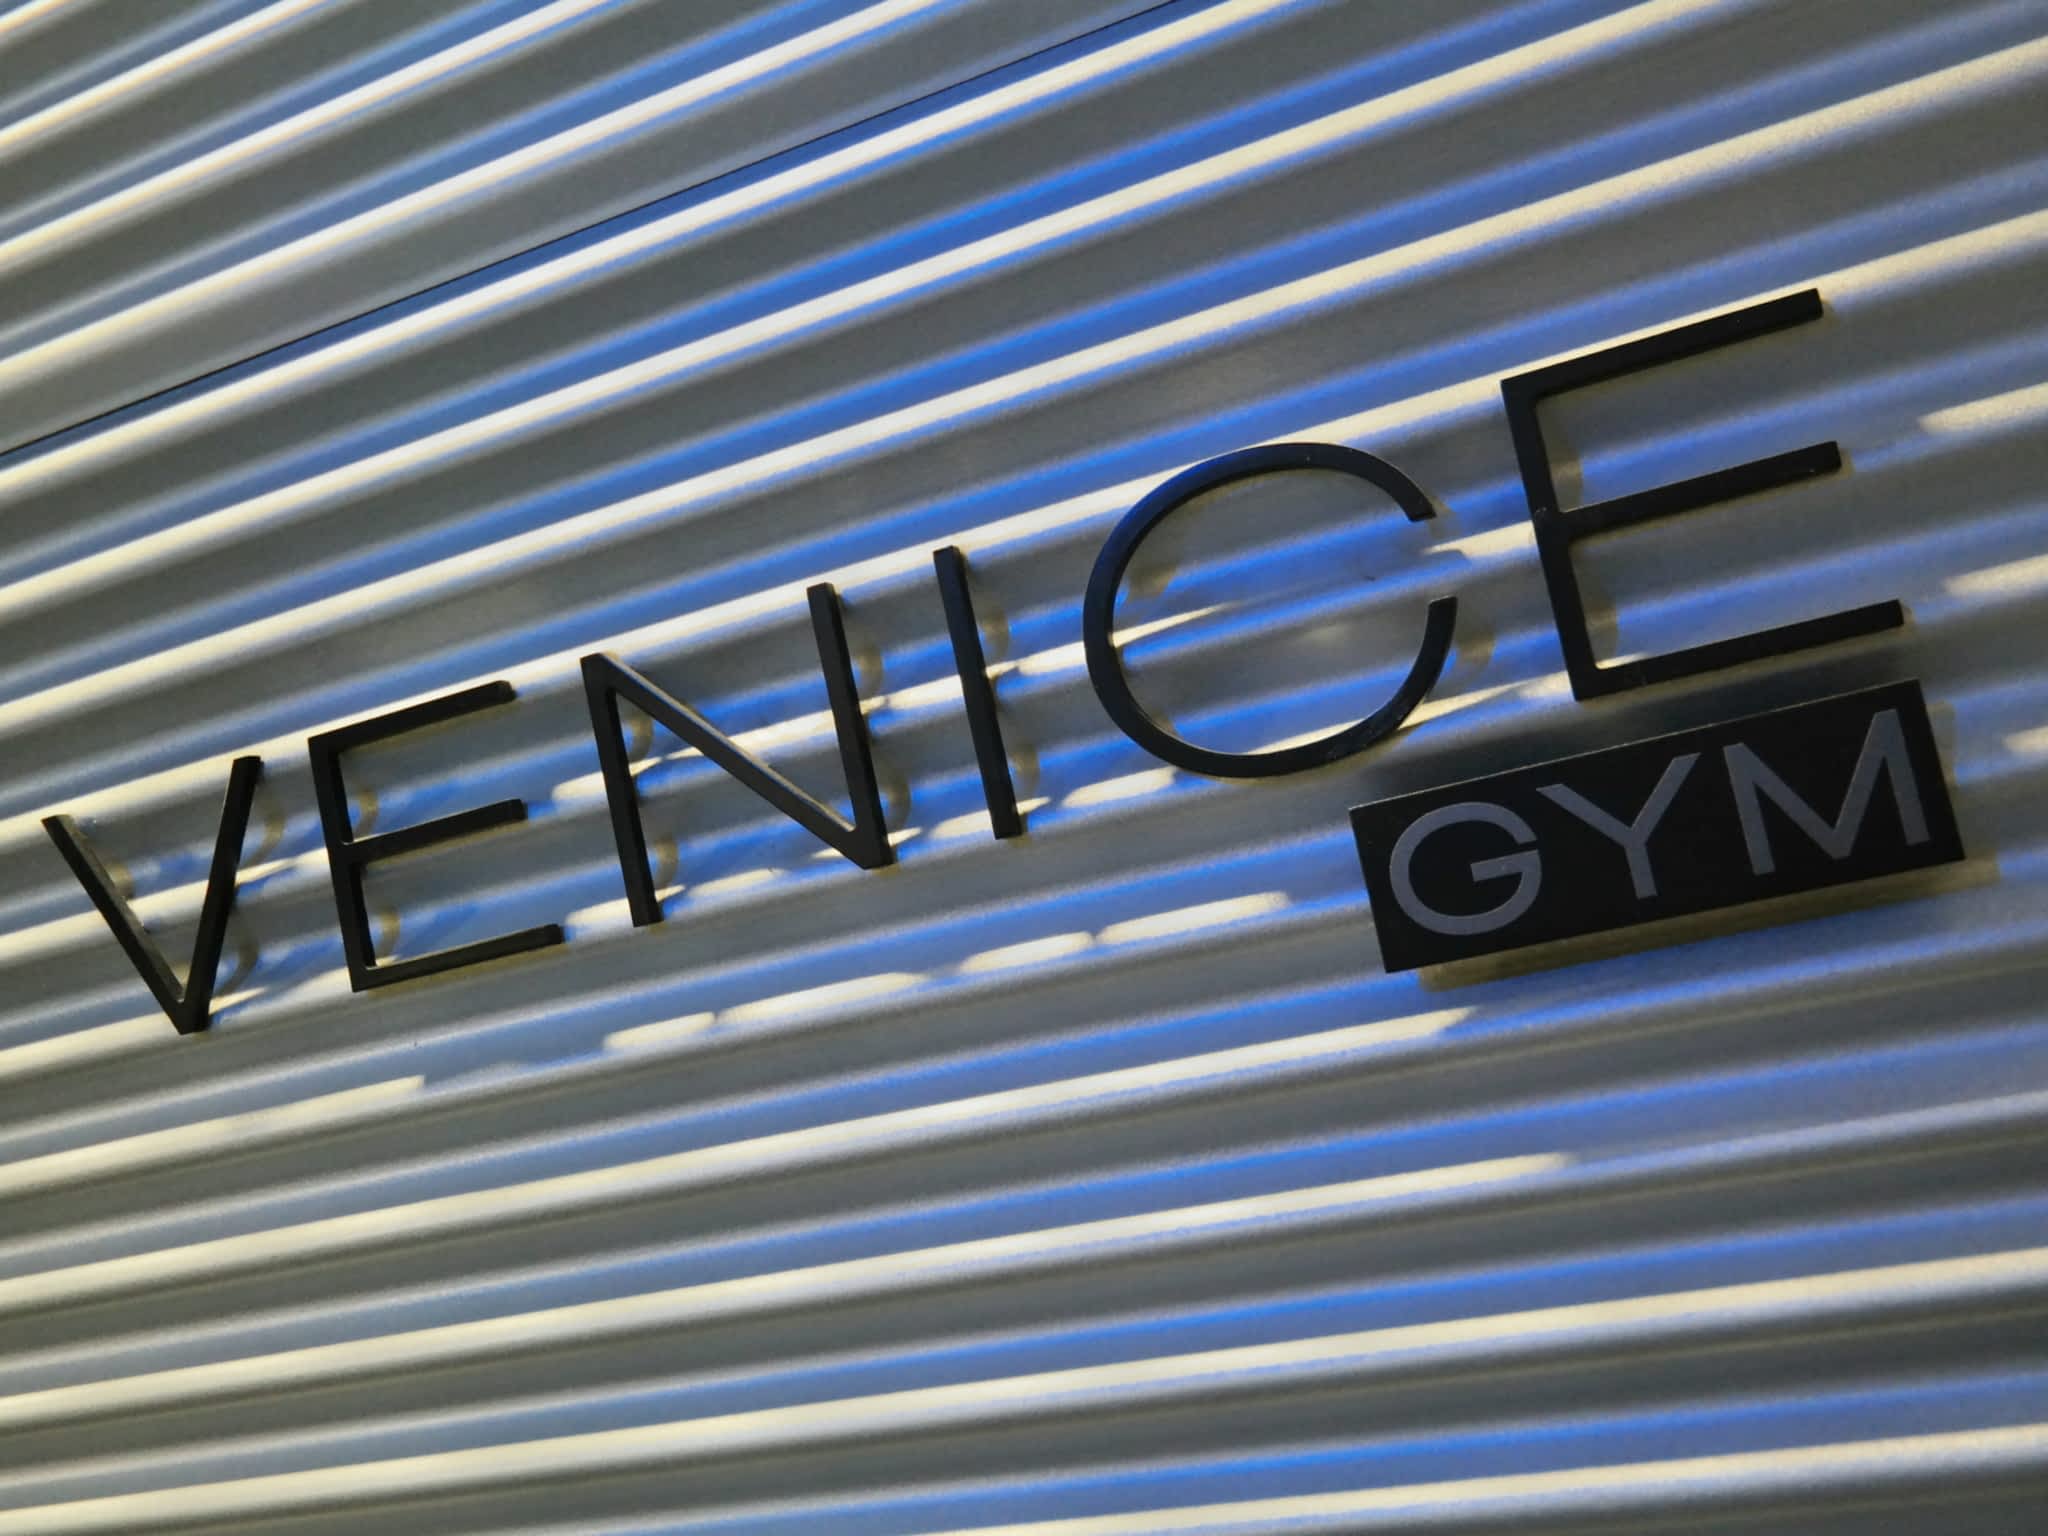 photo Venice Gym